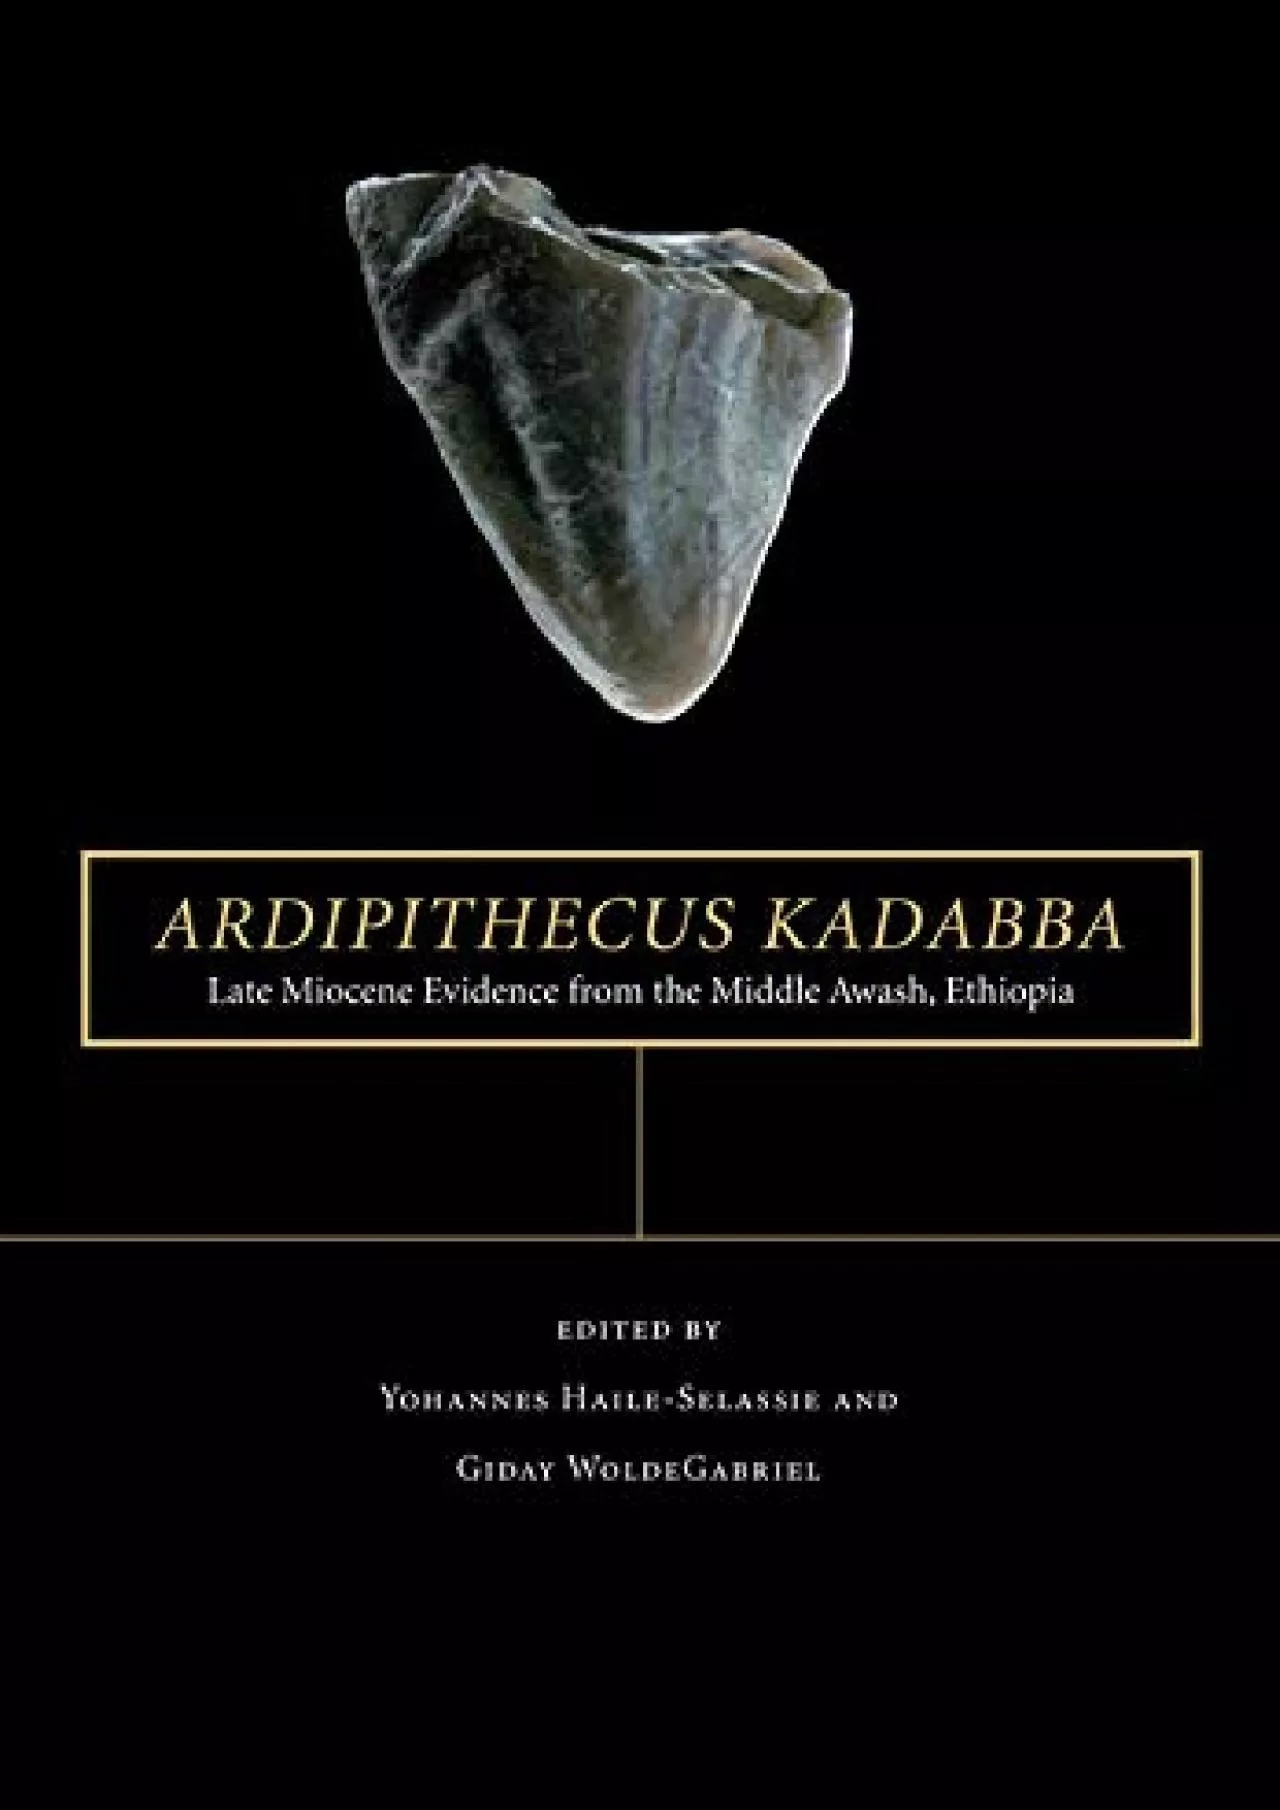 (EBOOK)-Ardipithecus kadabba: Late Miocene Evidence from the Middle Awash, Ethiopia (The